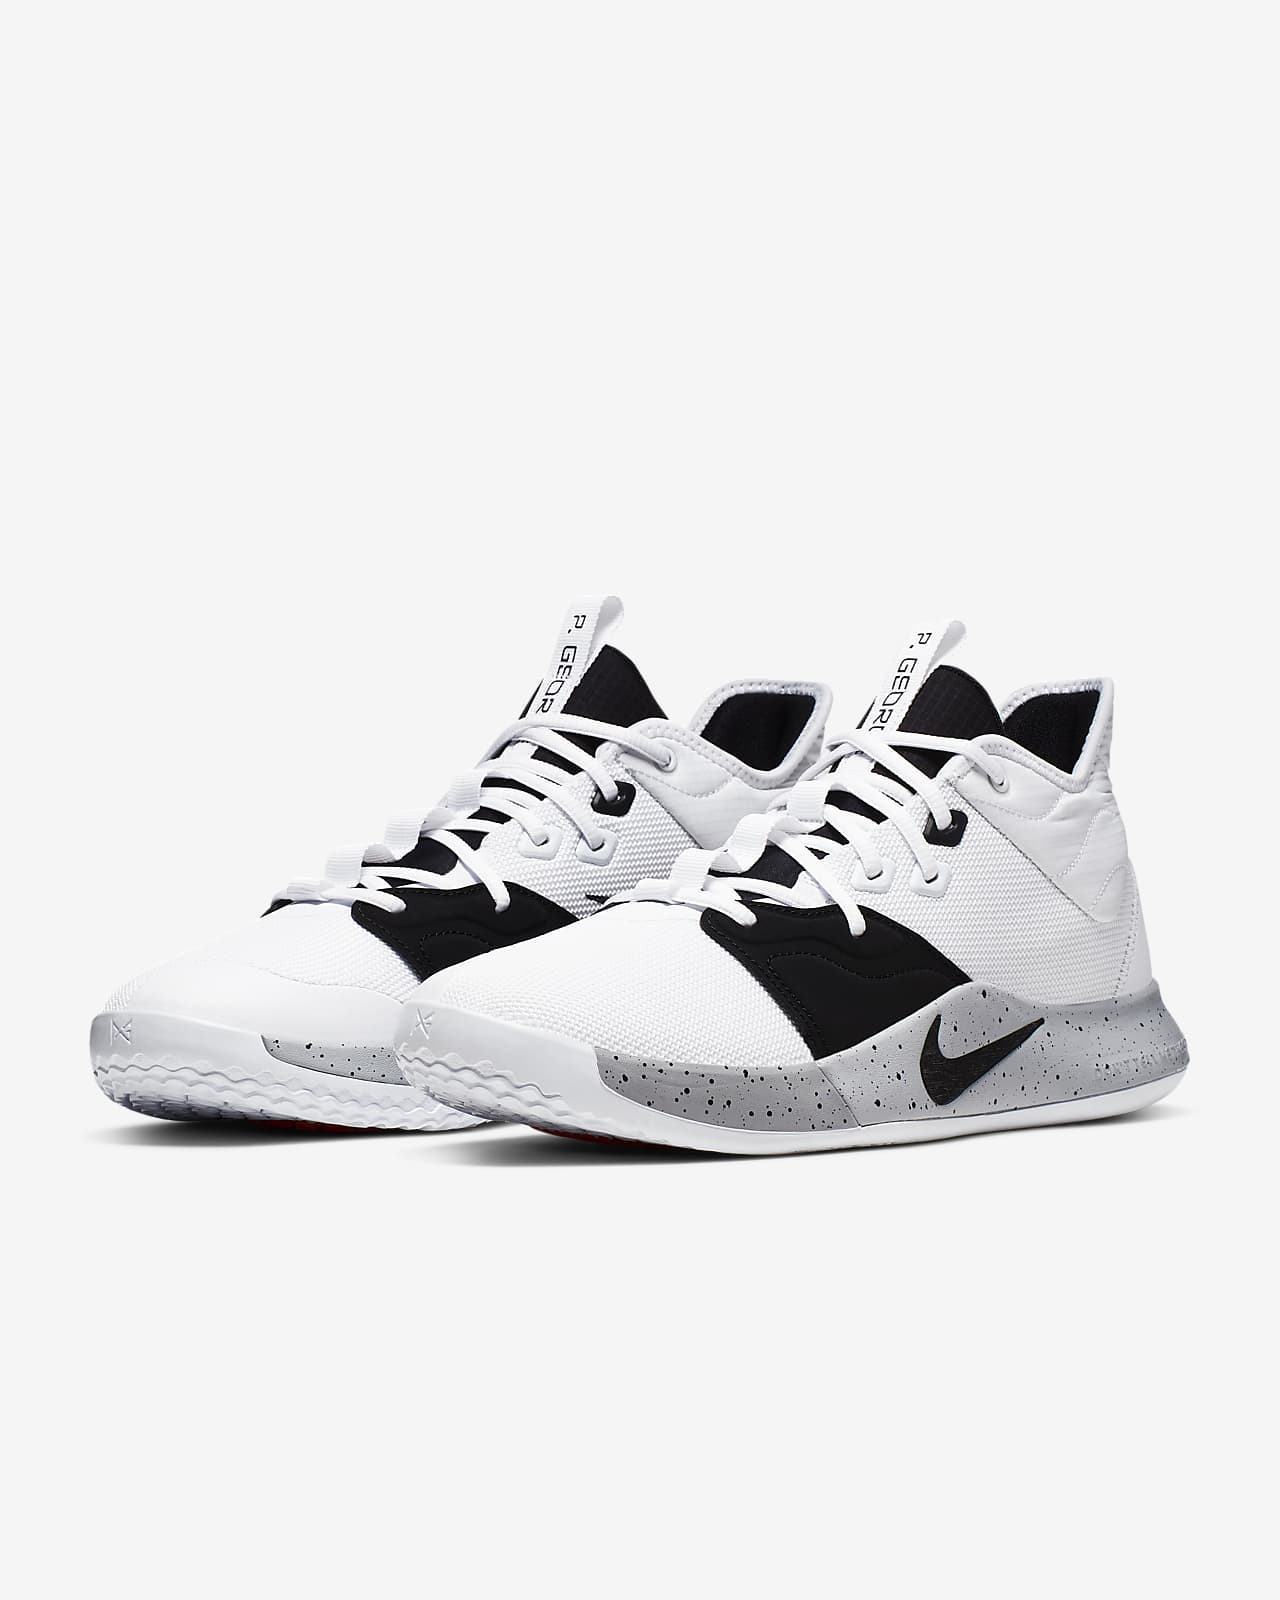 PG 3 Basketball Shoe. Nike AU